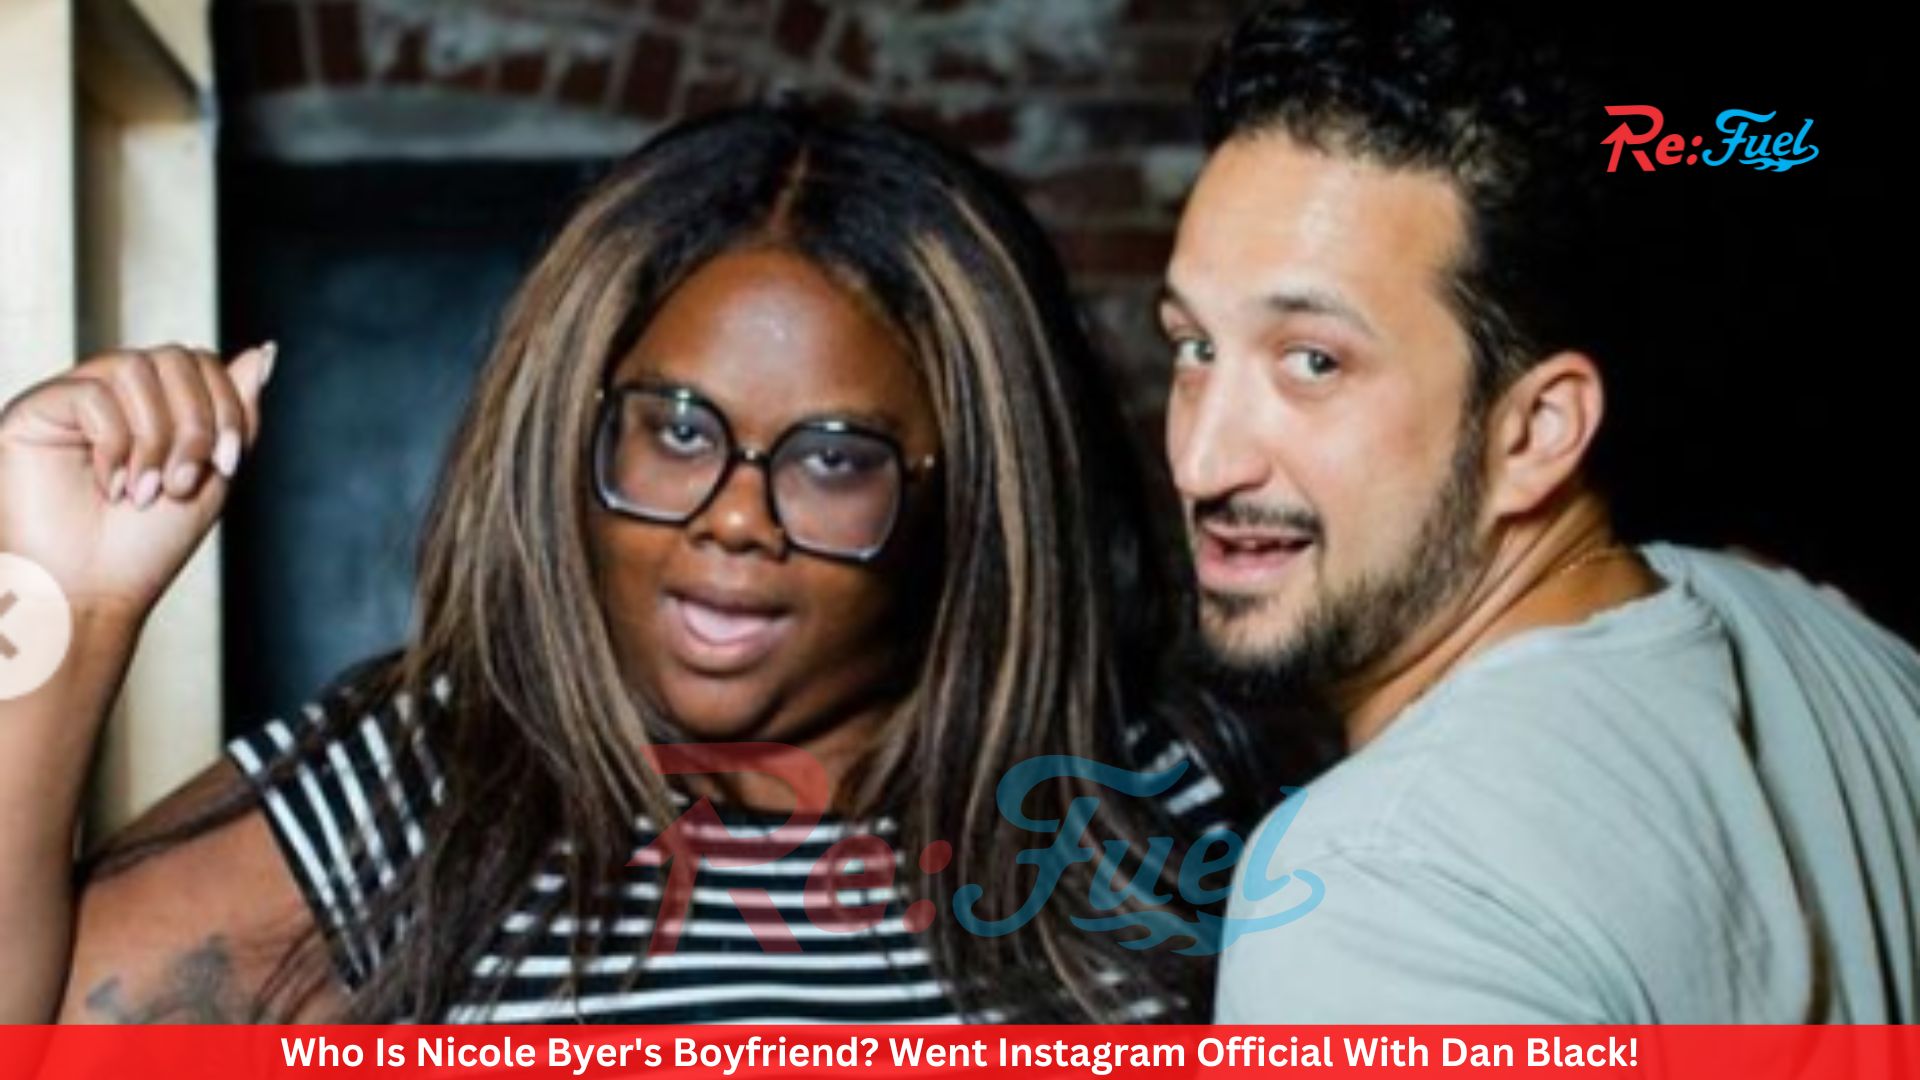 Who Is Nicole Byer's Boyfriend? Went Instagram Official With Dan Black!